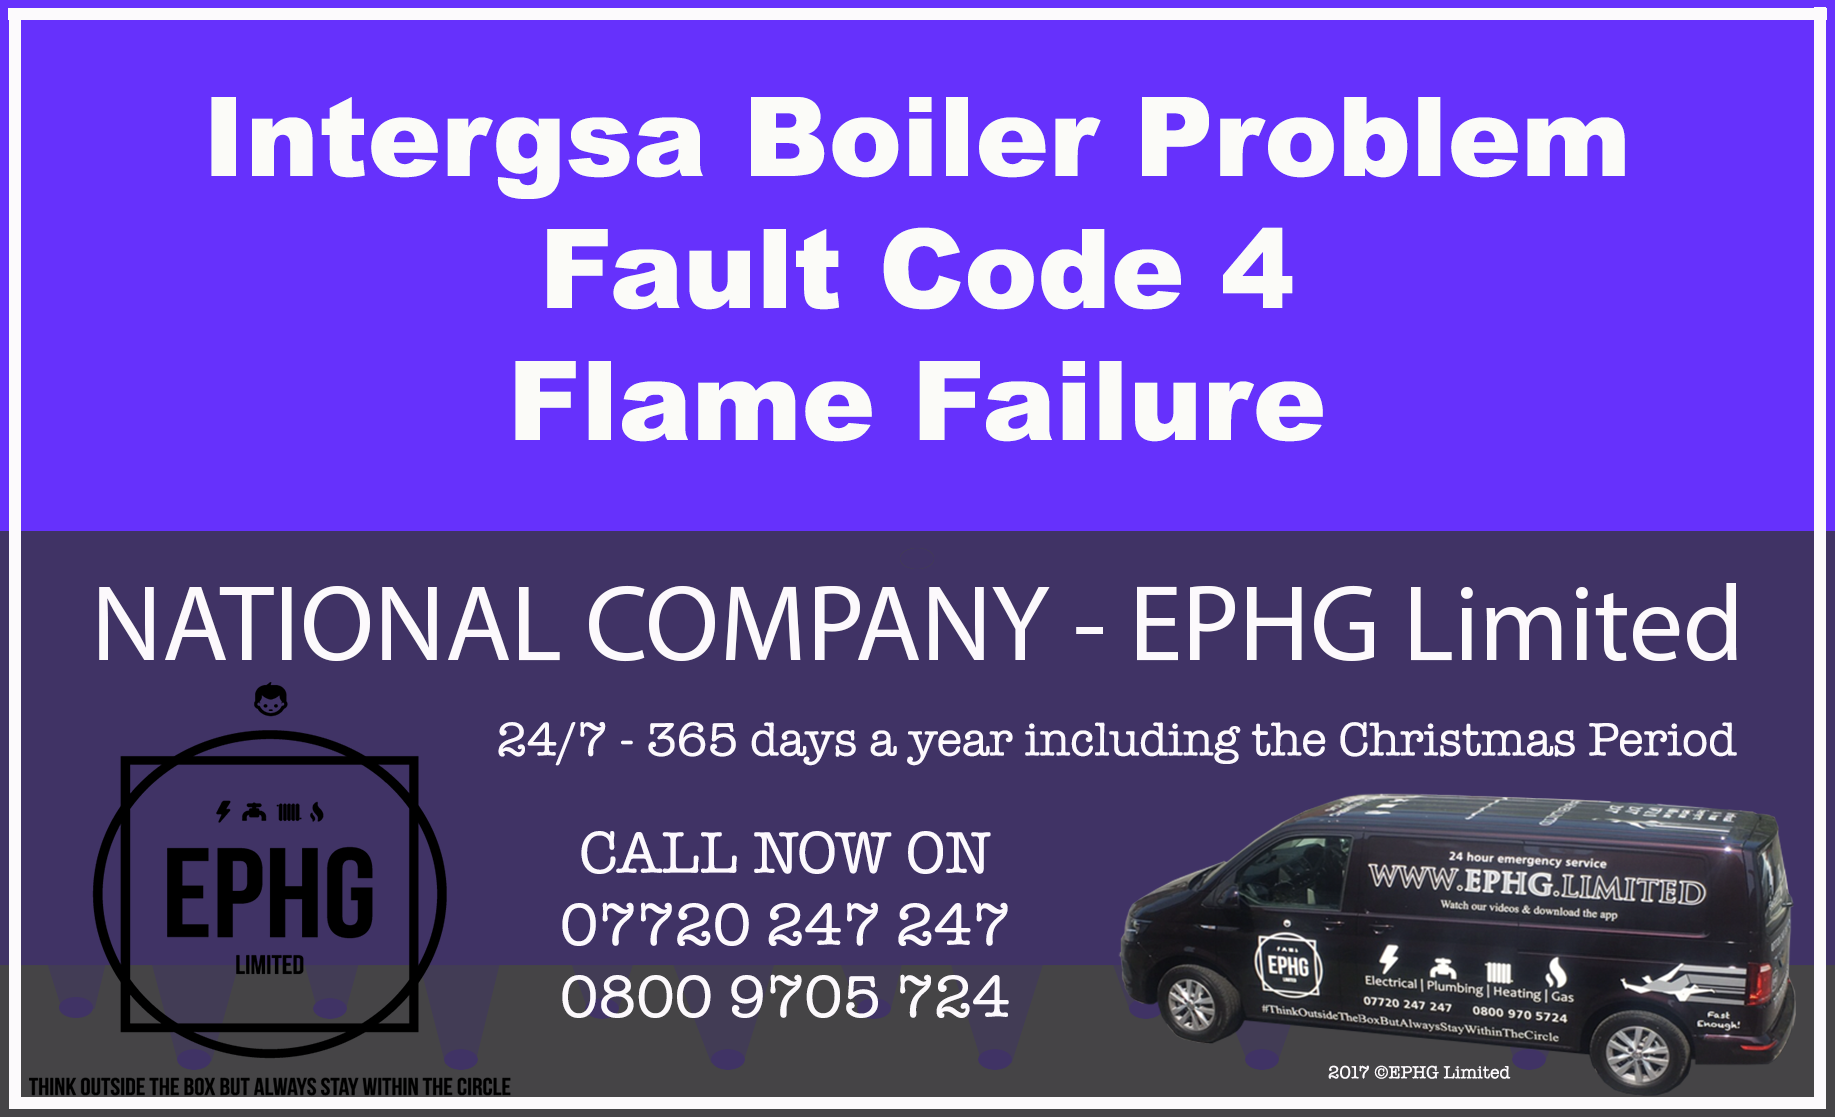 Intergas boiler error code 4